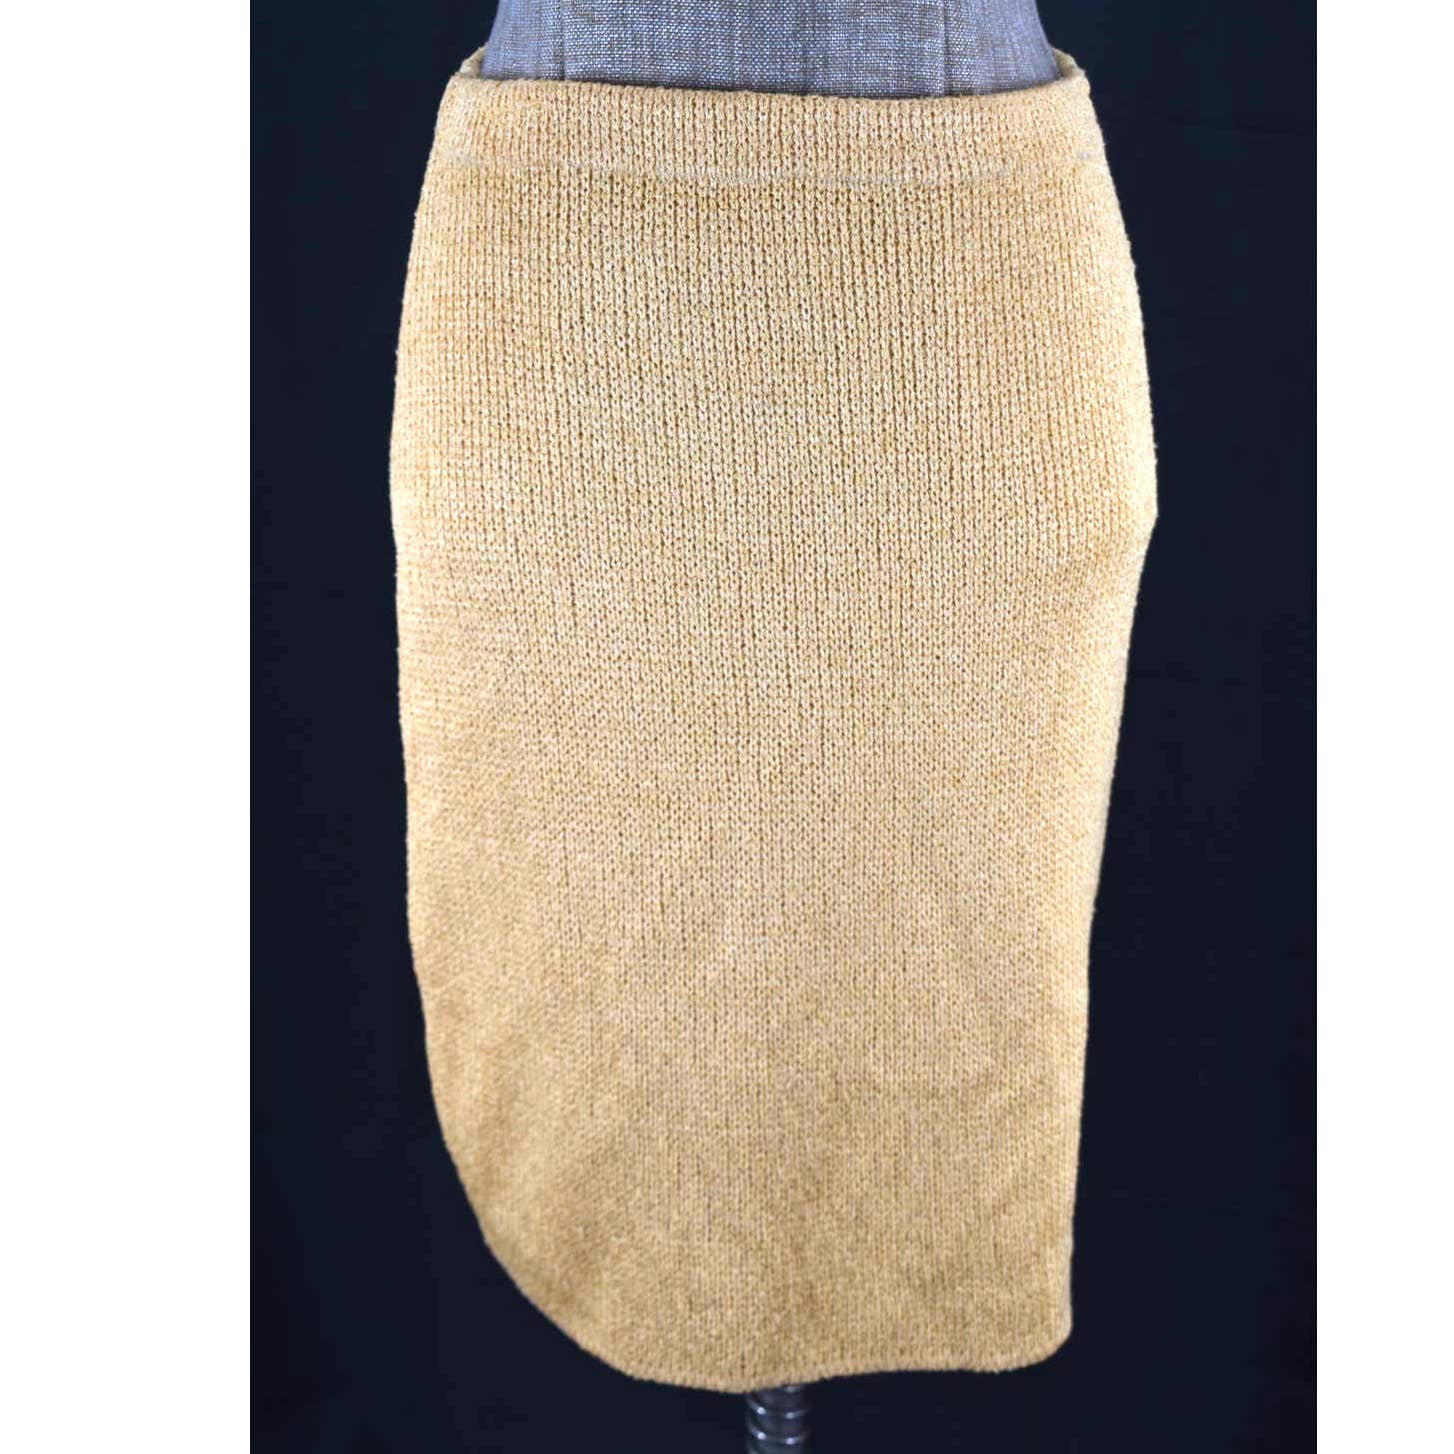 Vintage French Rags Peach Knit Midi Skirt - 3 Medium